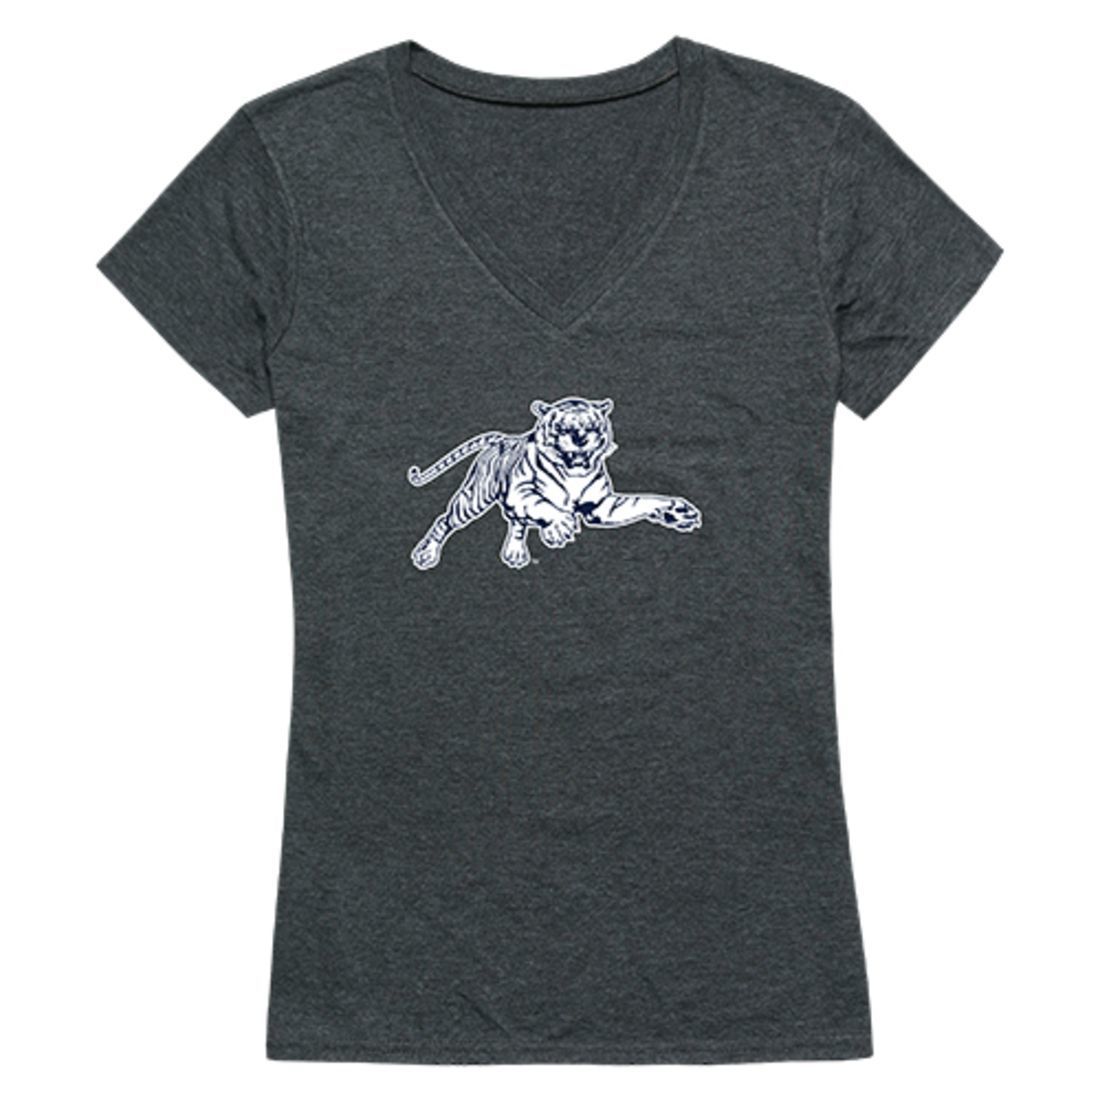 JSU Jackson State University Tigers Womens Cinder T-Shirt Heather Charcoal-Campus-Wardrobe